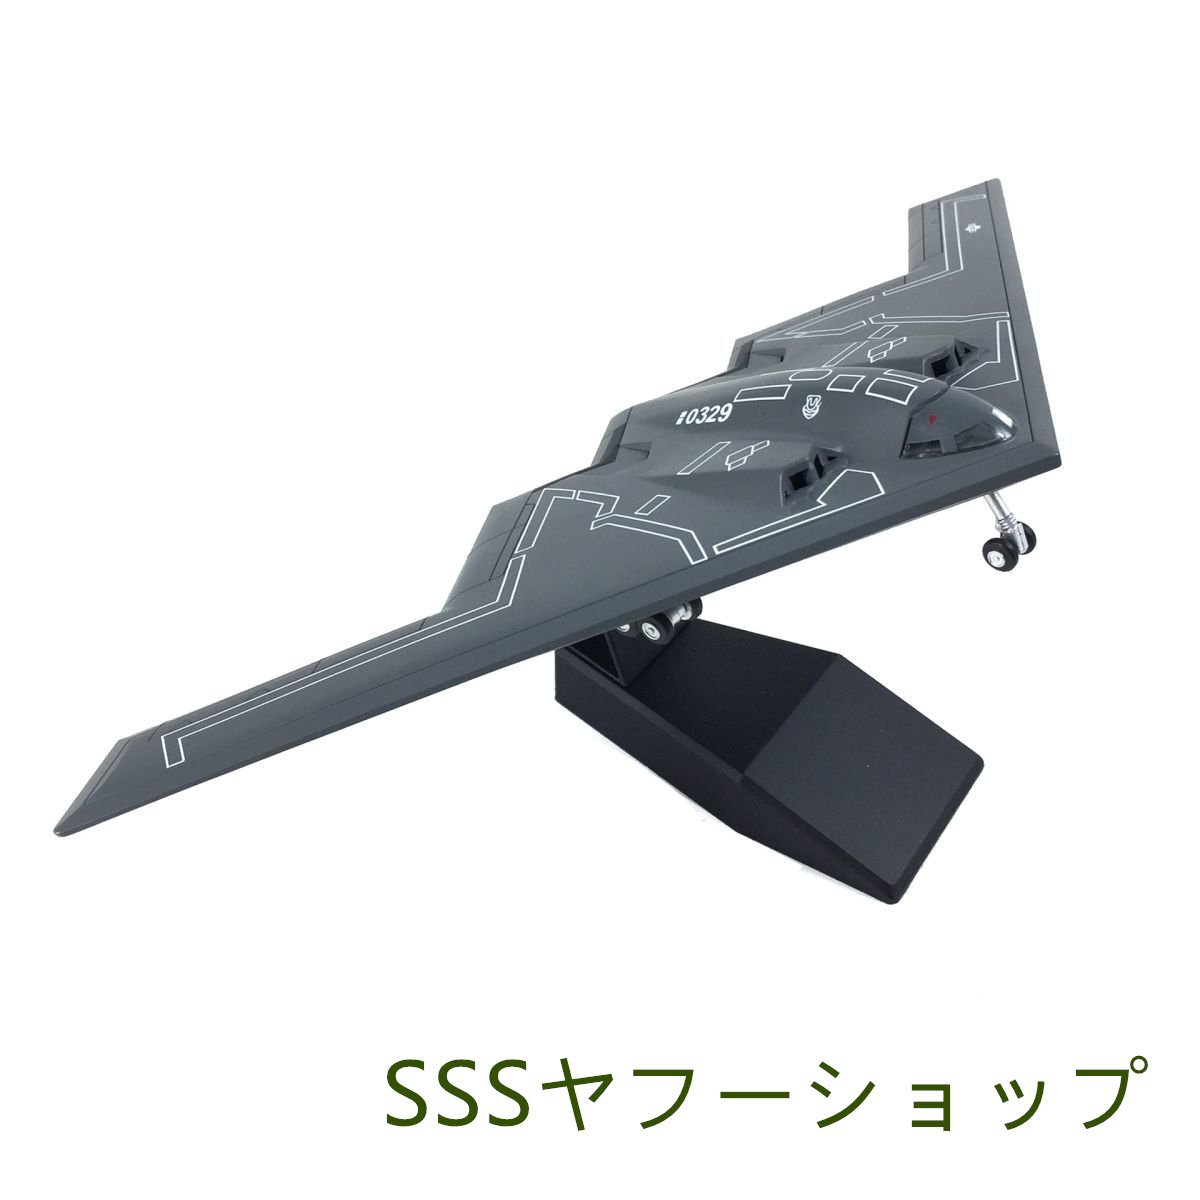 B-2ステルス戦略爆撃機1/200スケールダイキャスト金属モデル戦闘_画像7